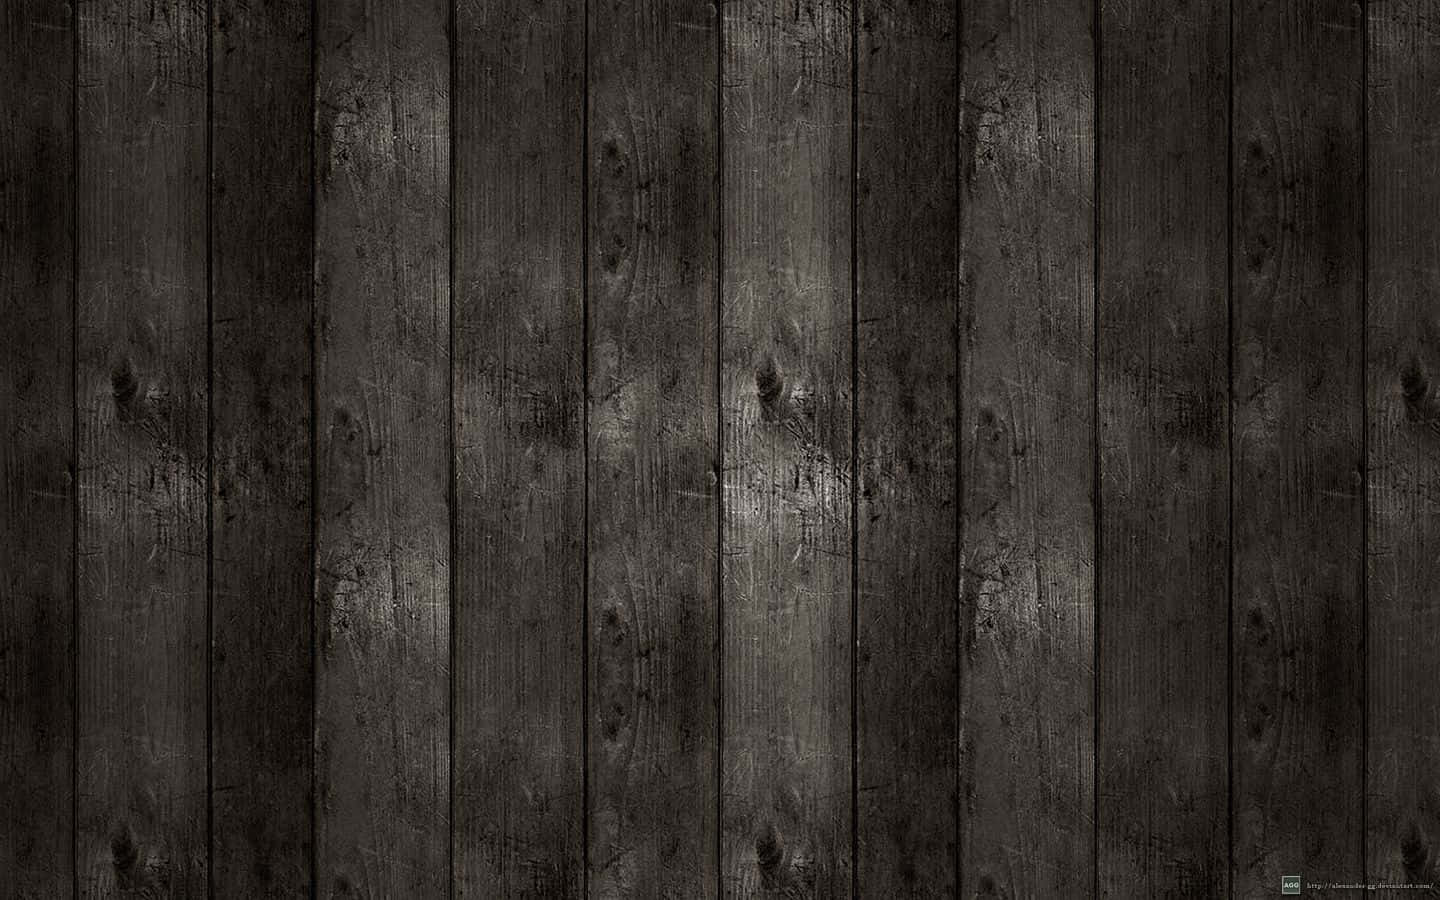 black wood grain background